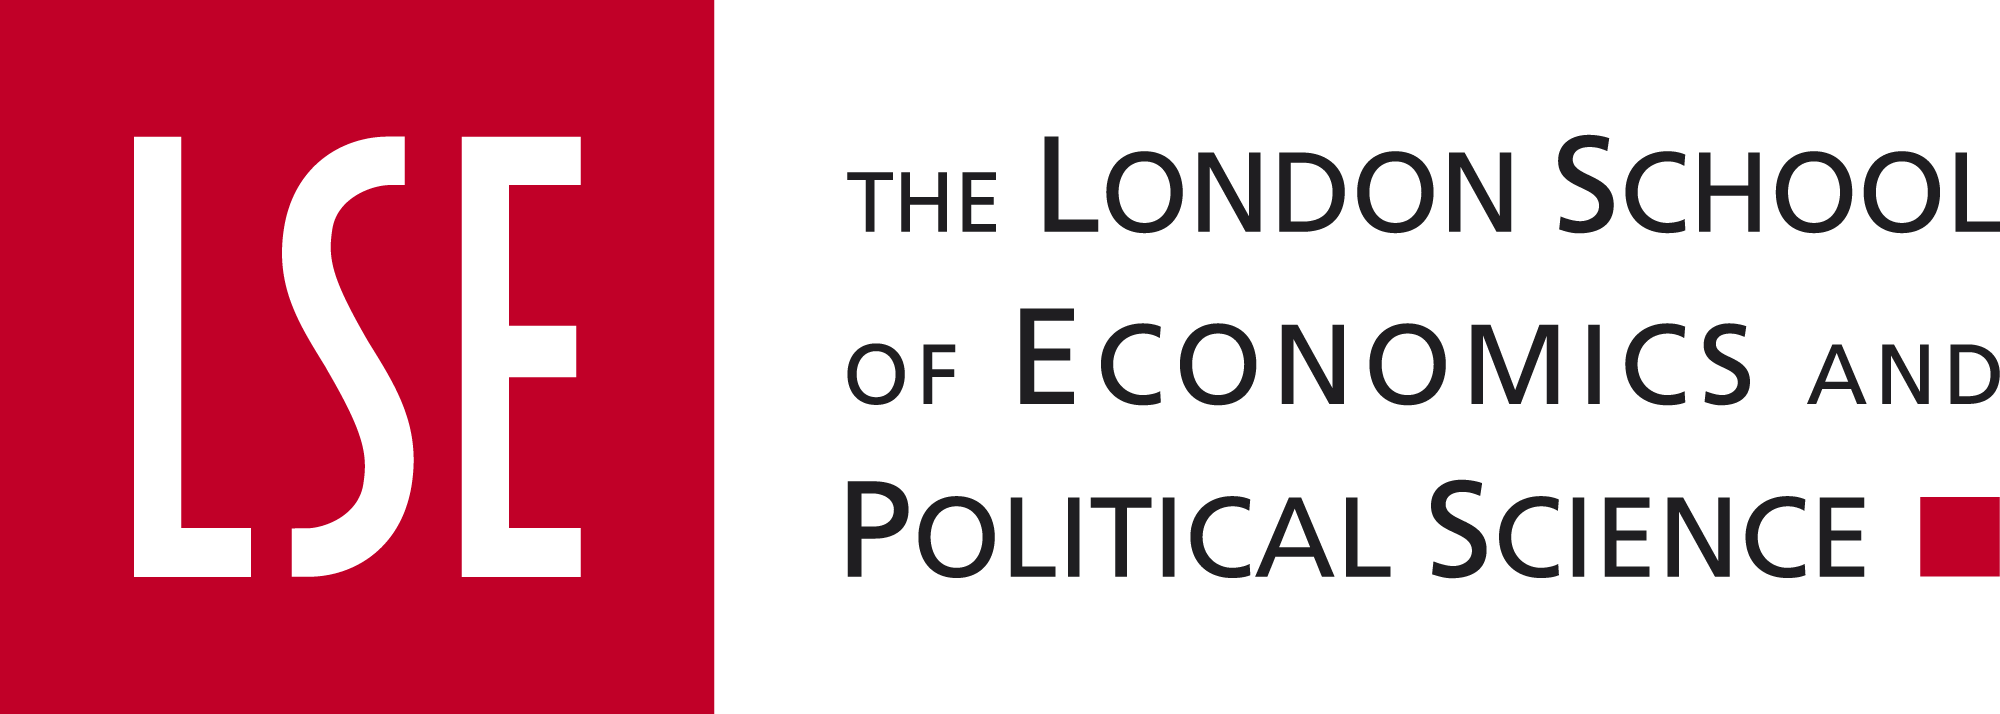 LOGO_london-school-economics.png